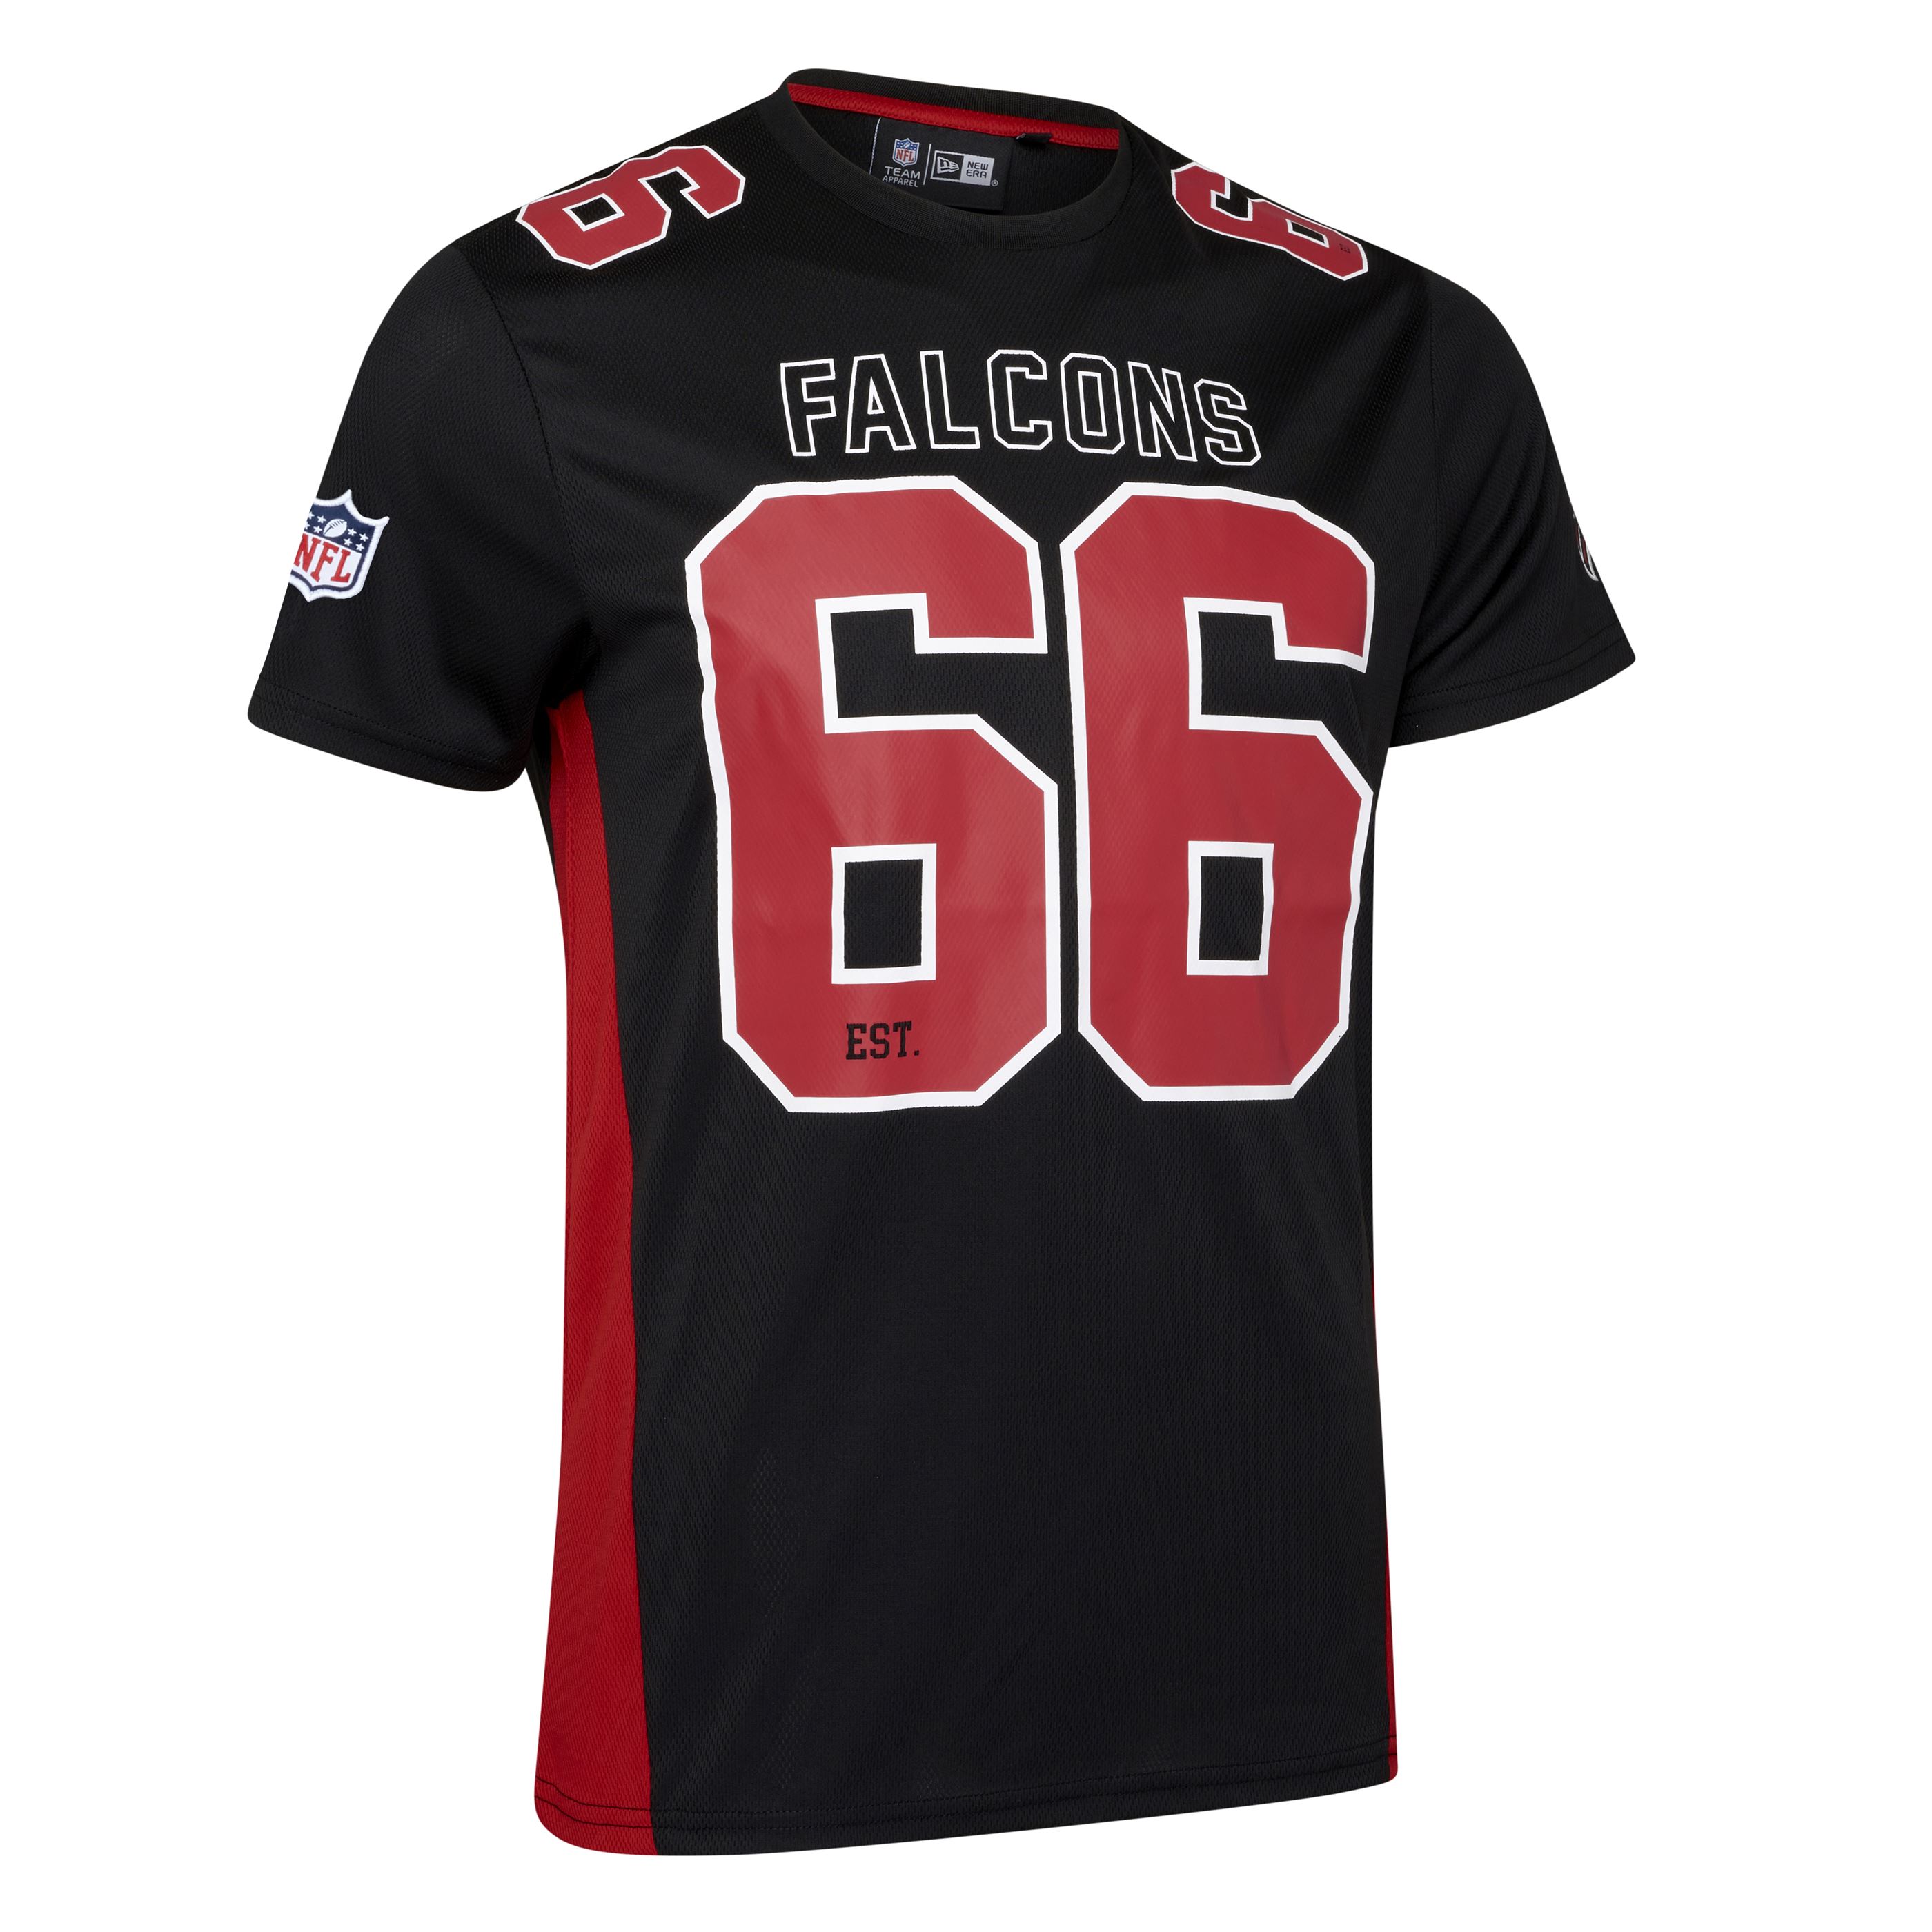 Atlanta Falcons NFL Established Number Mesh Tee Black T-Shirt New Era